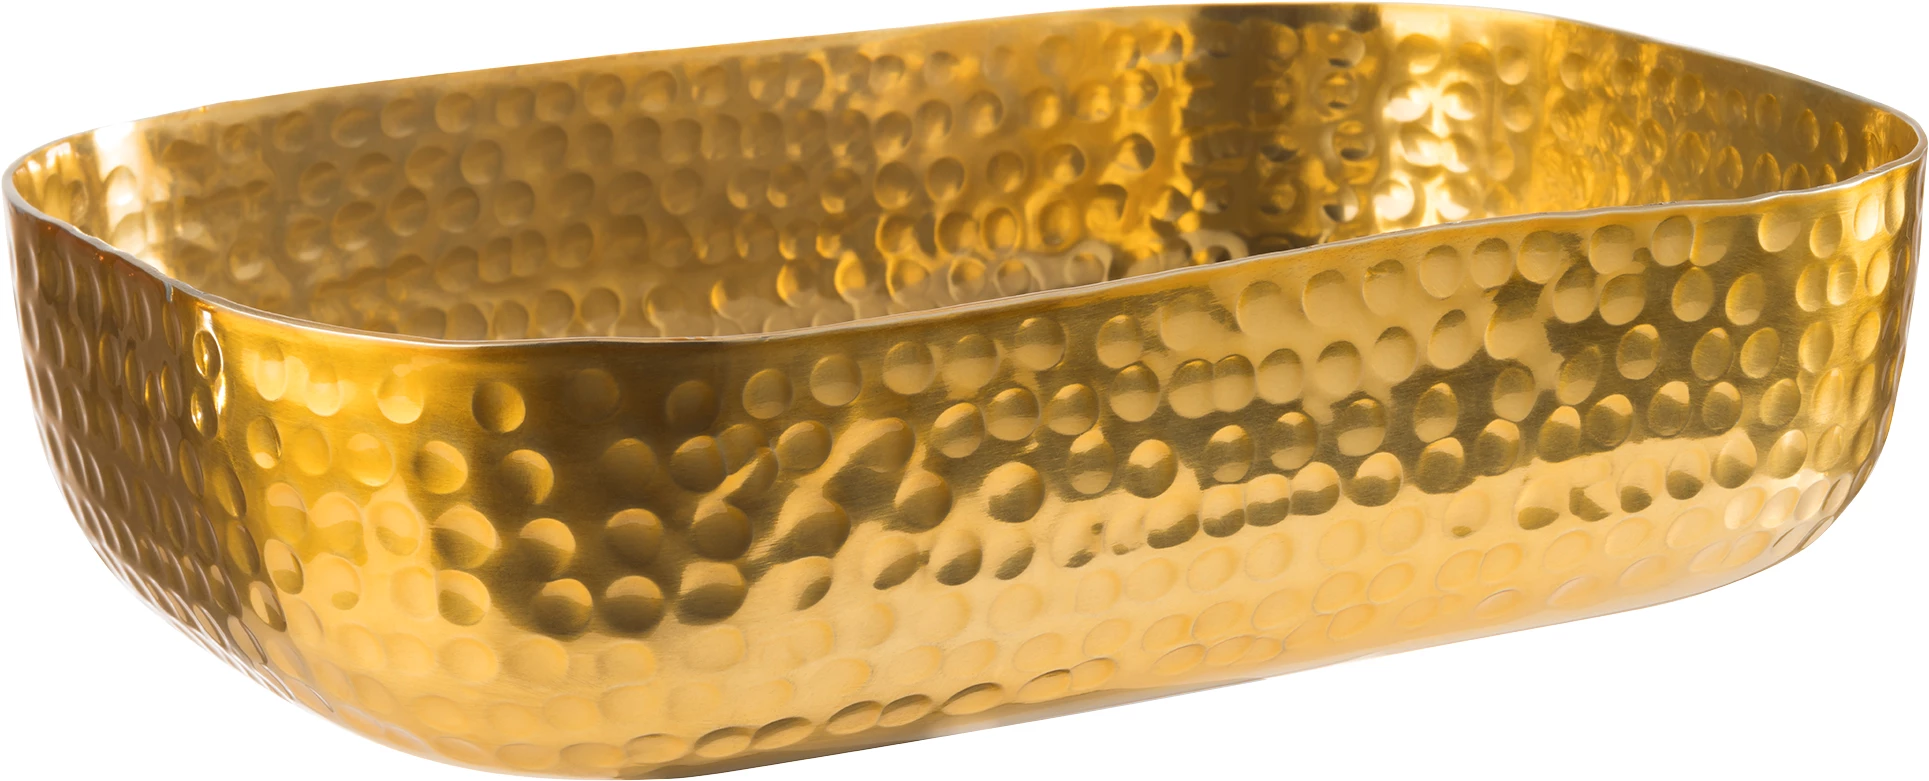 APS skål, alu/guld, 140 cl, 23 x 15,5 cm